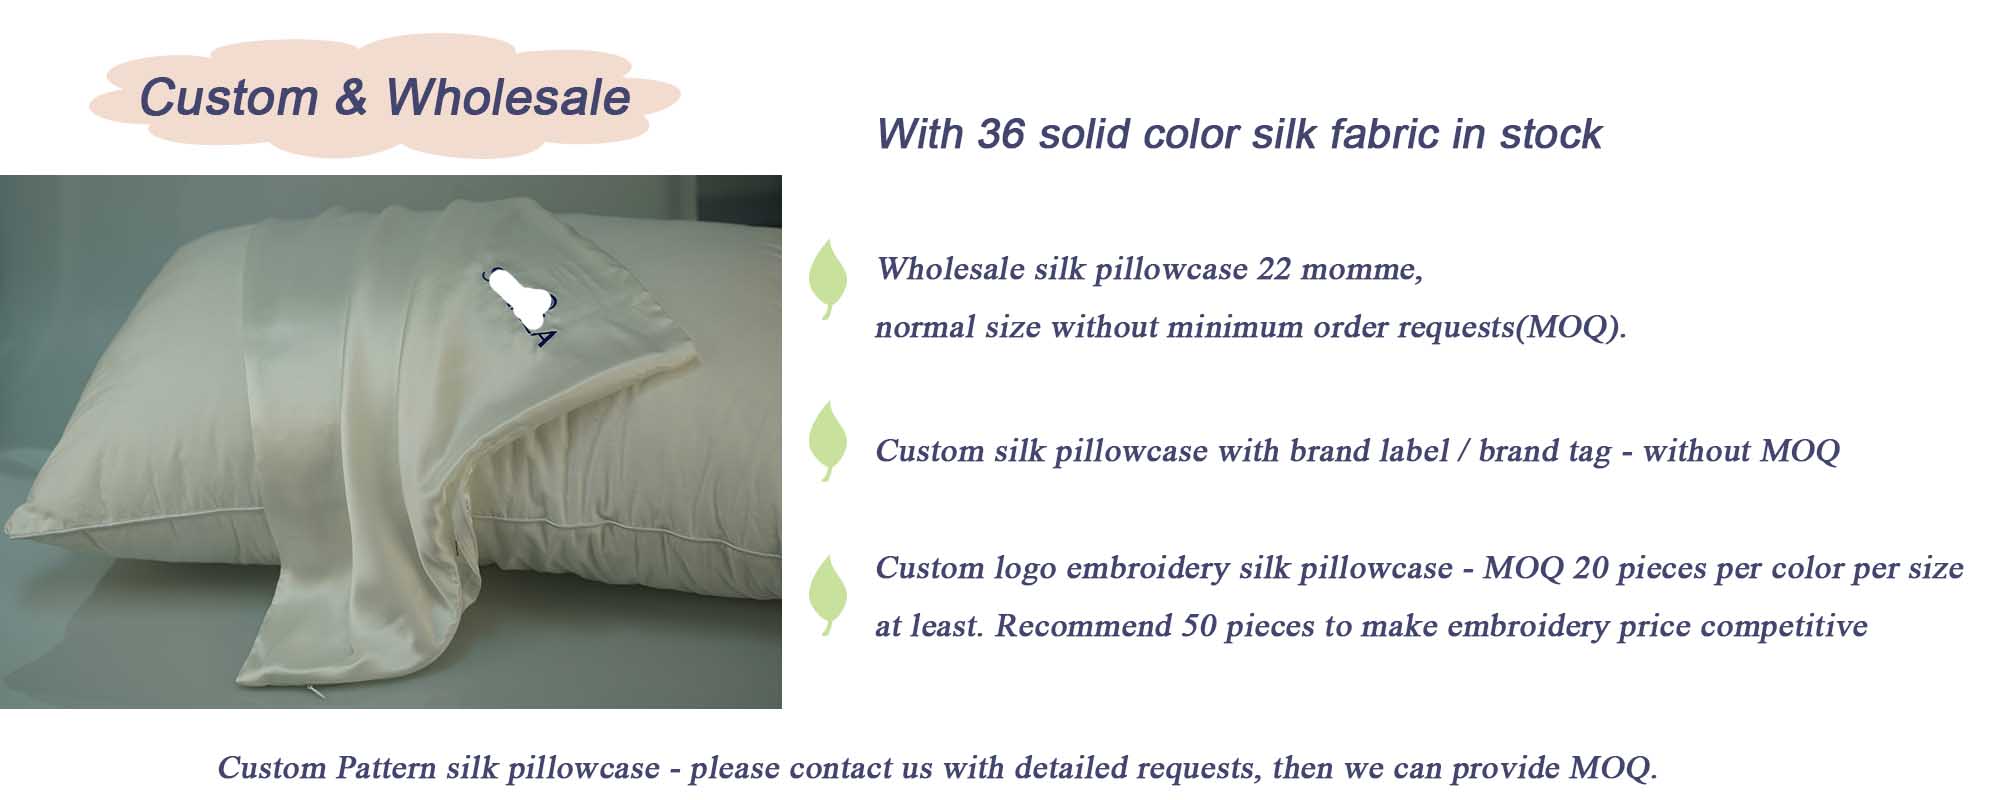 22 momme silk pillowcase